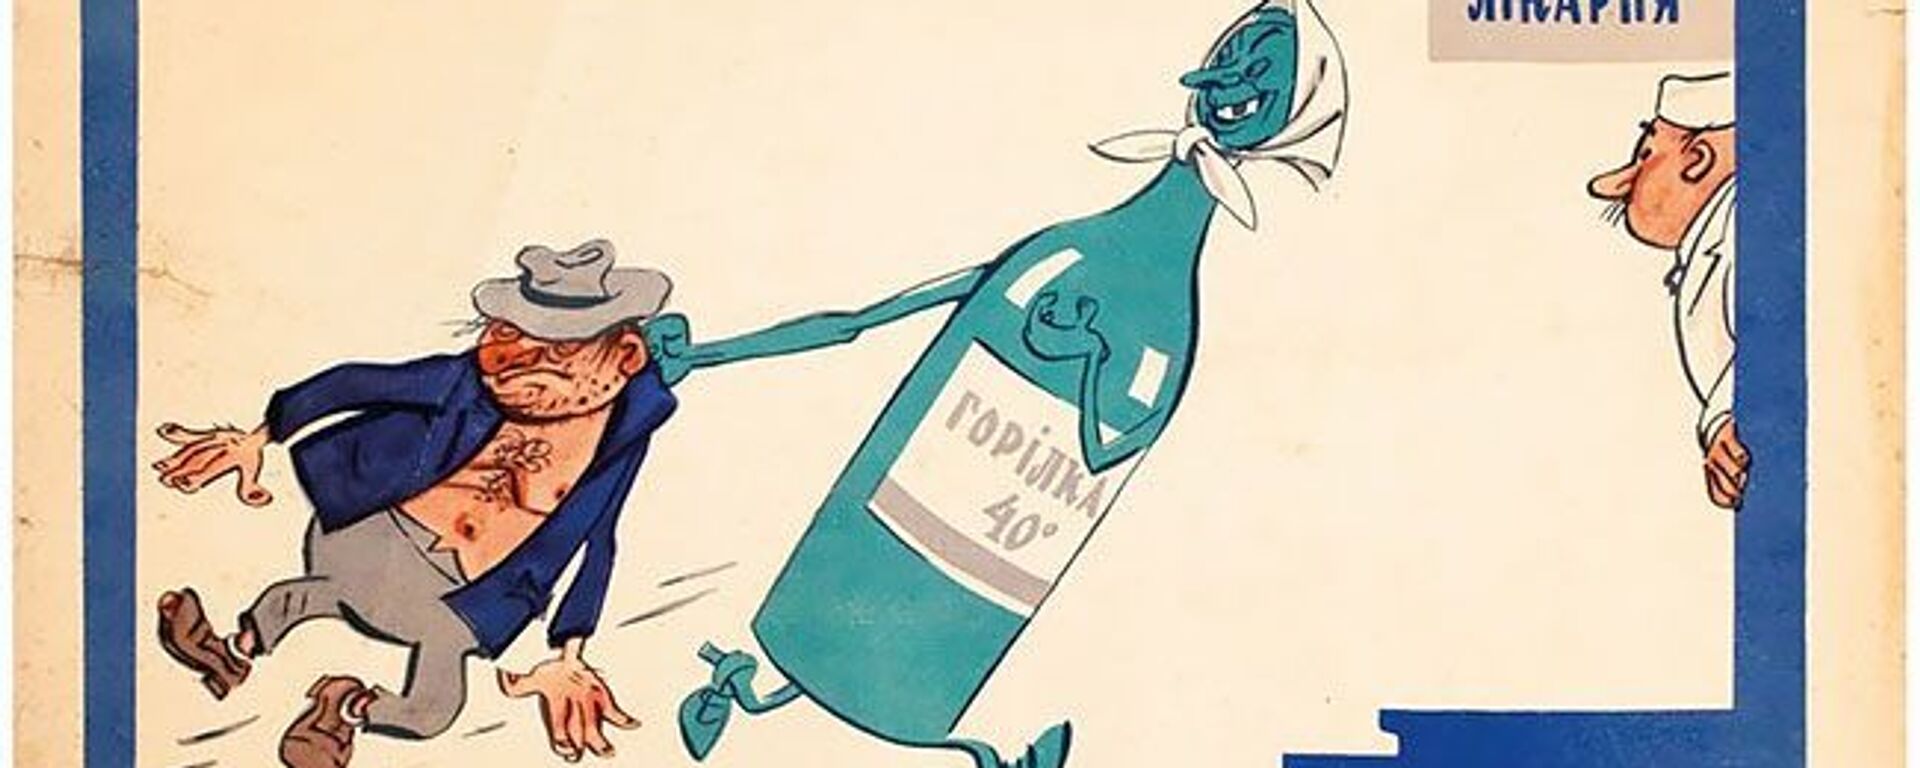 Vintage Soviet anti-alcohol poster. - Sputnik International, 1920, 06.05.2020